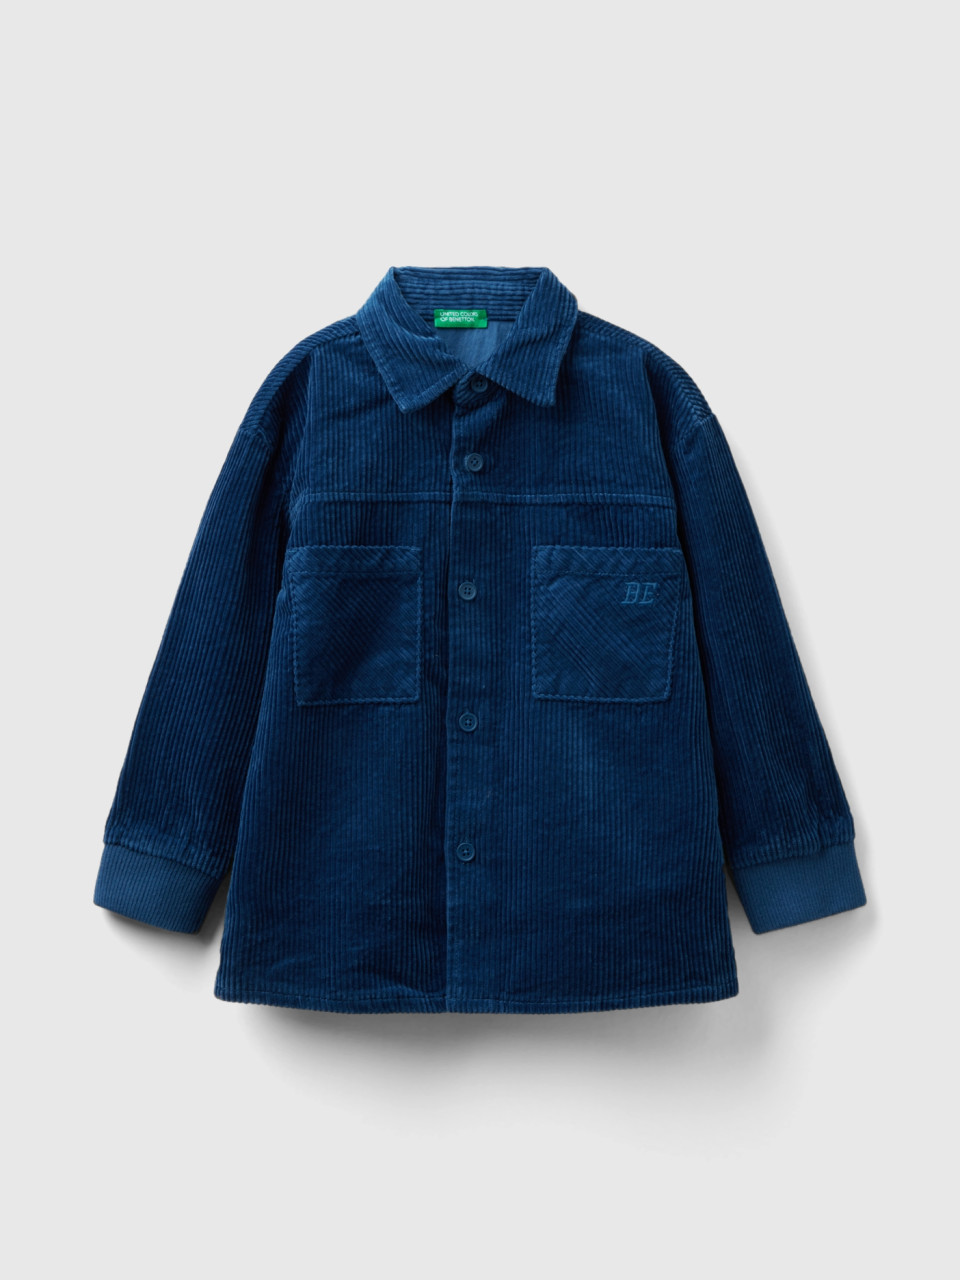 Benetton, Velvet Shirt With Pockets, Air Force Blue, Kids